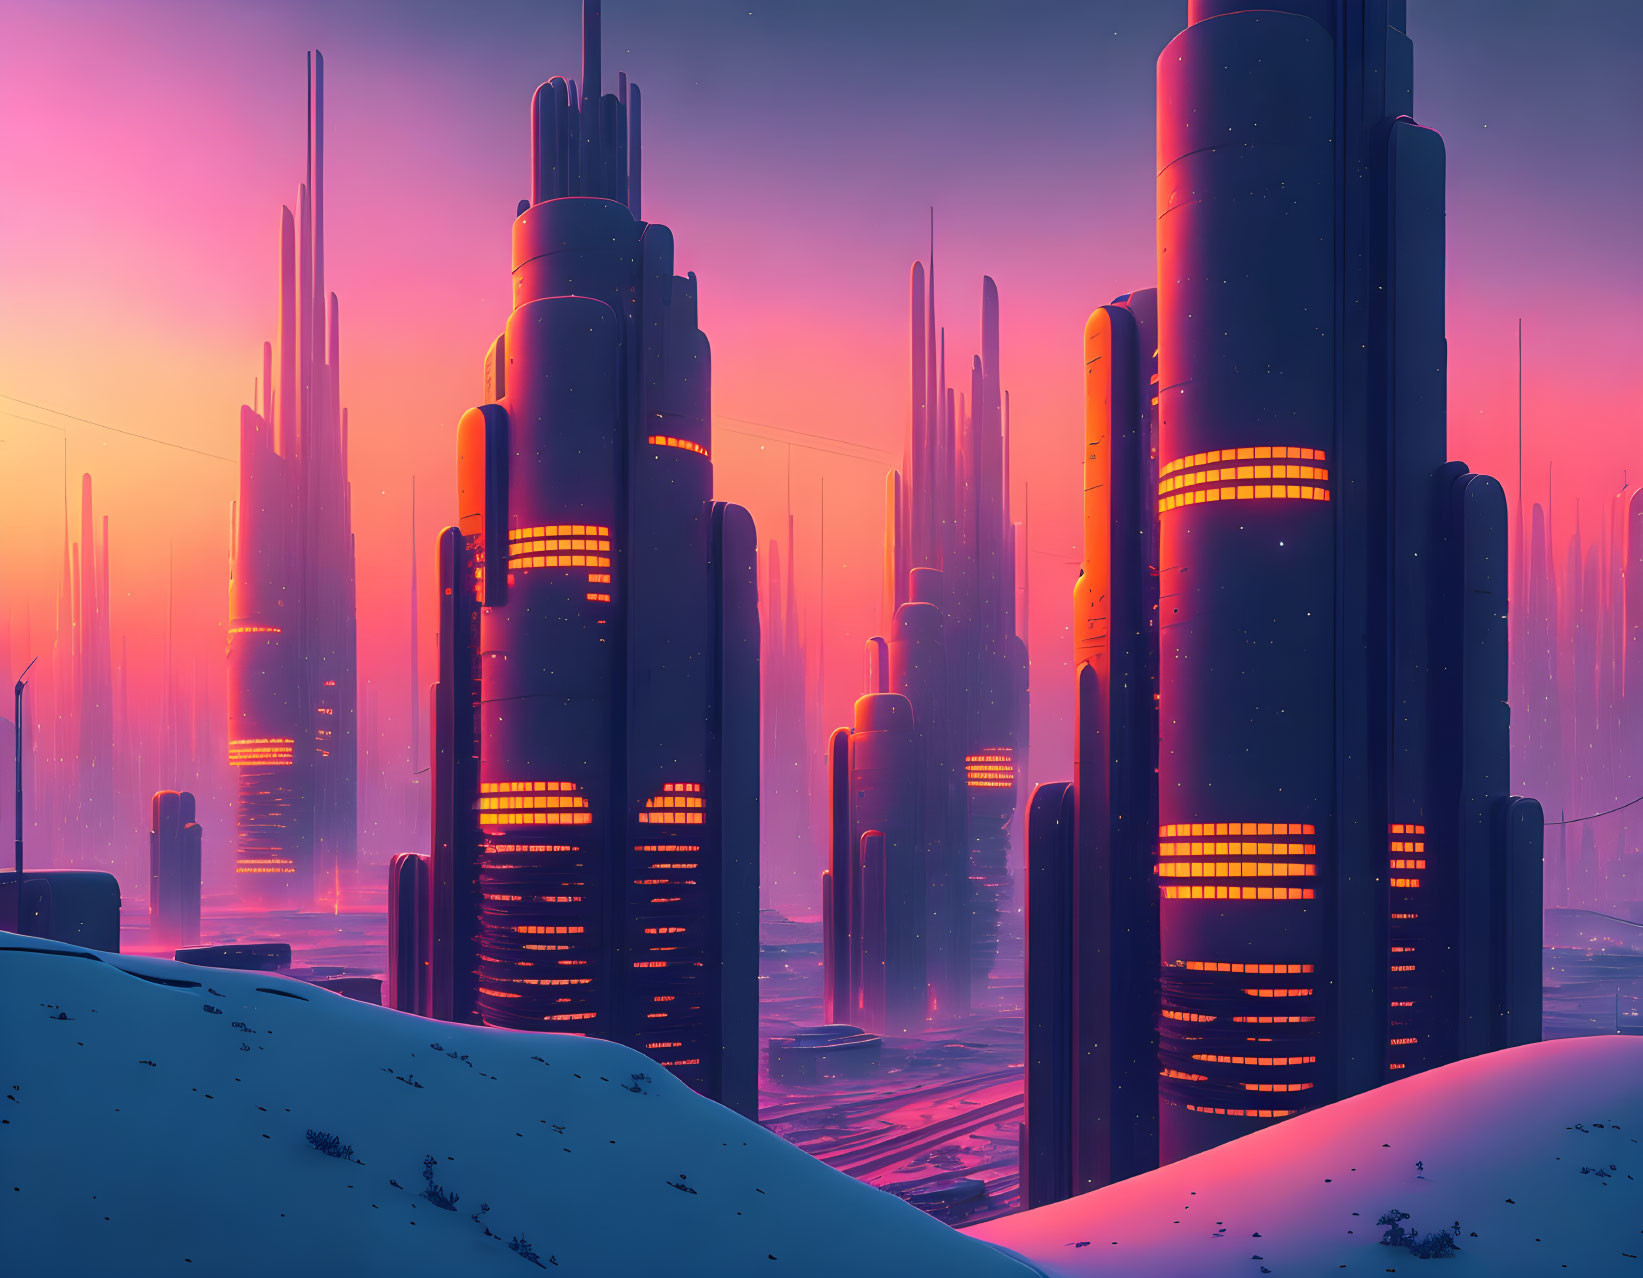 Science fiction city